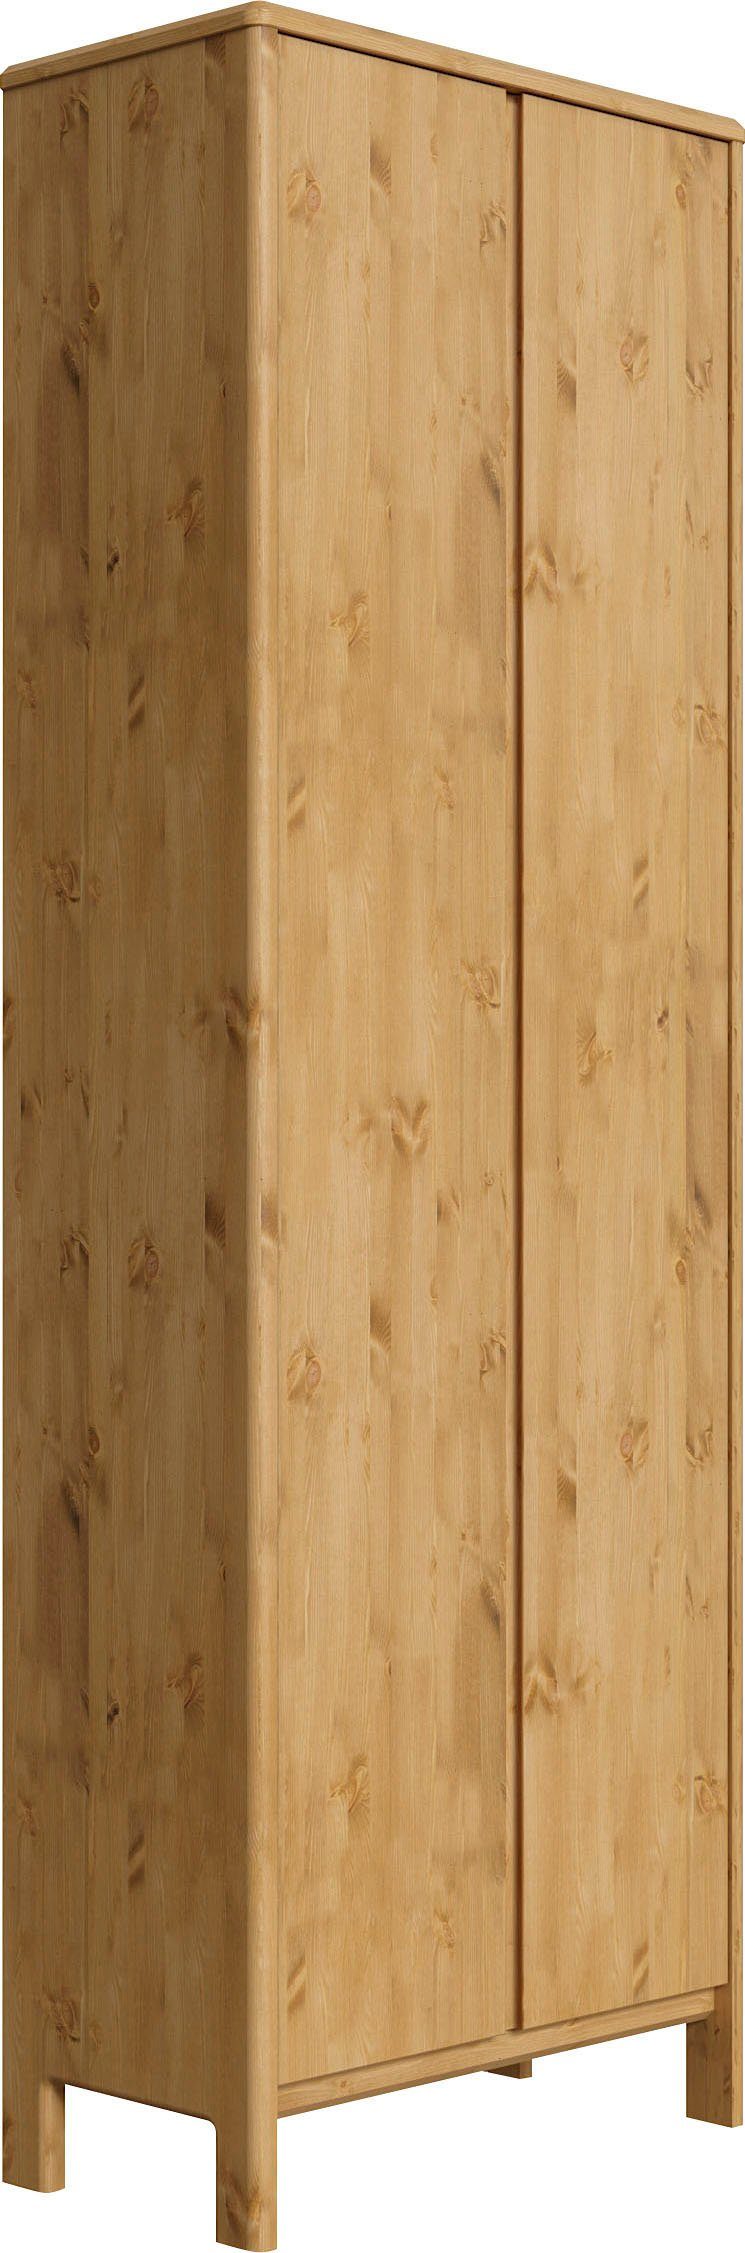 Home affaire Garderobenschrank Luven aus Massivholz, Höhe 192 cm